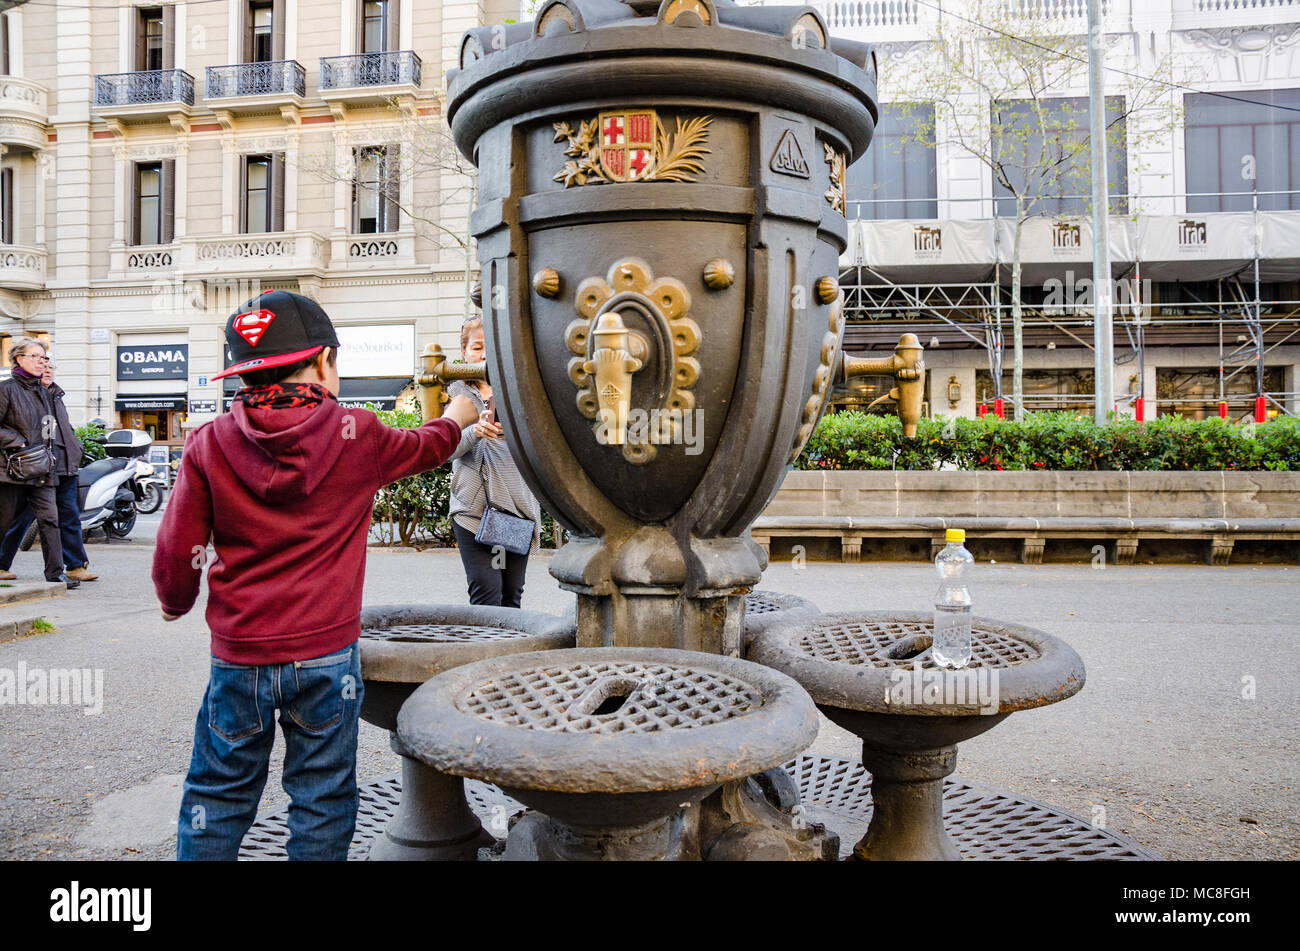 Font de Canaletes ist ein Trinkbrunnen auf La Rambla in Barcelona, Spanien. Stockfoto